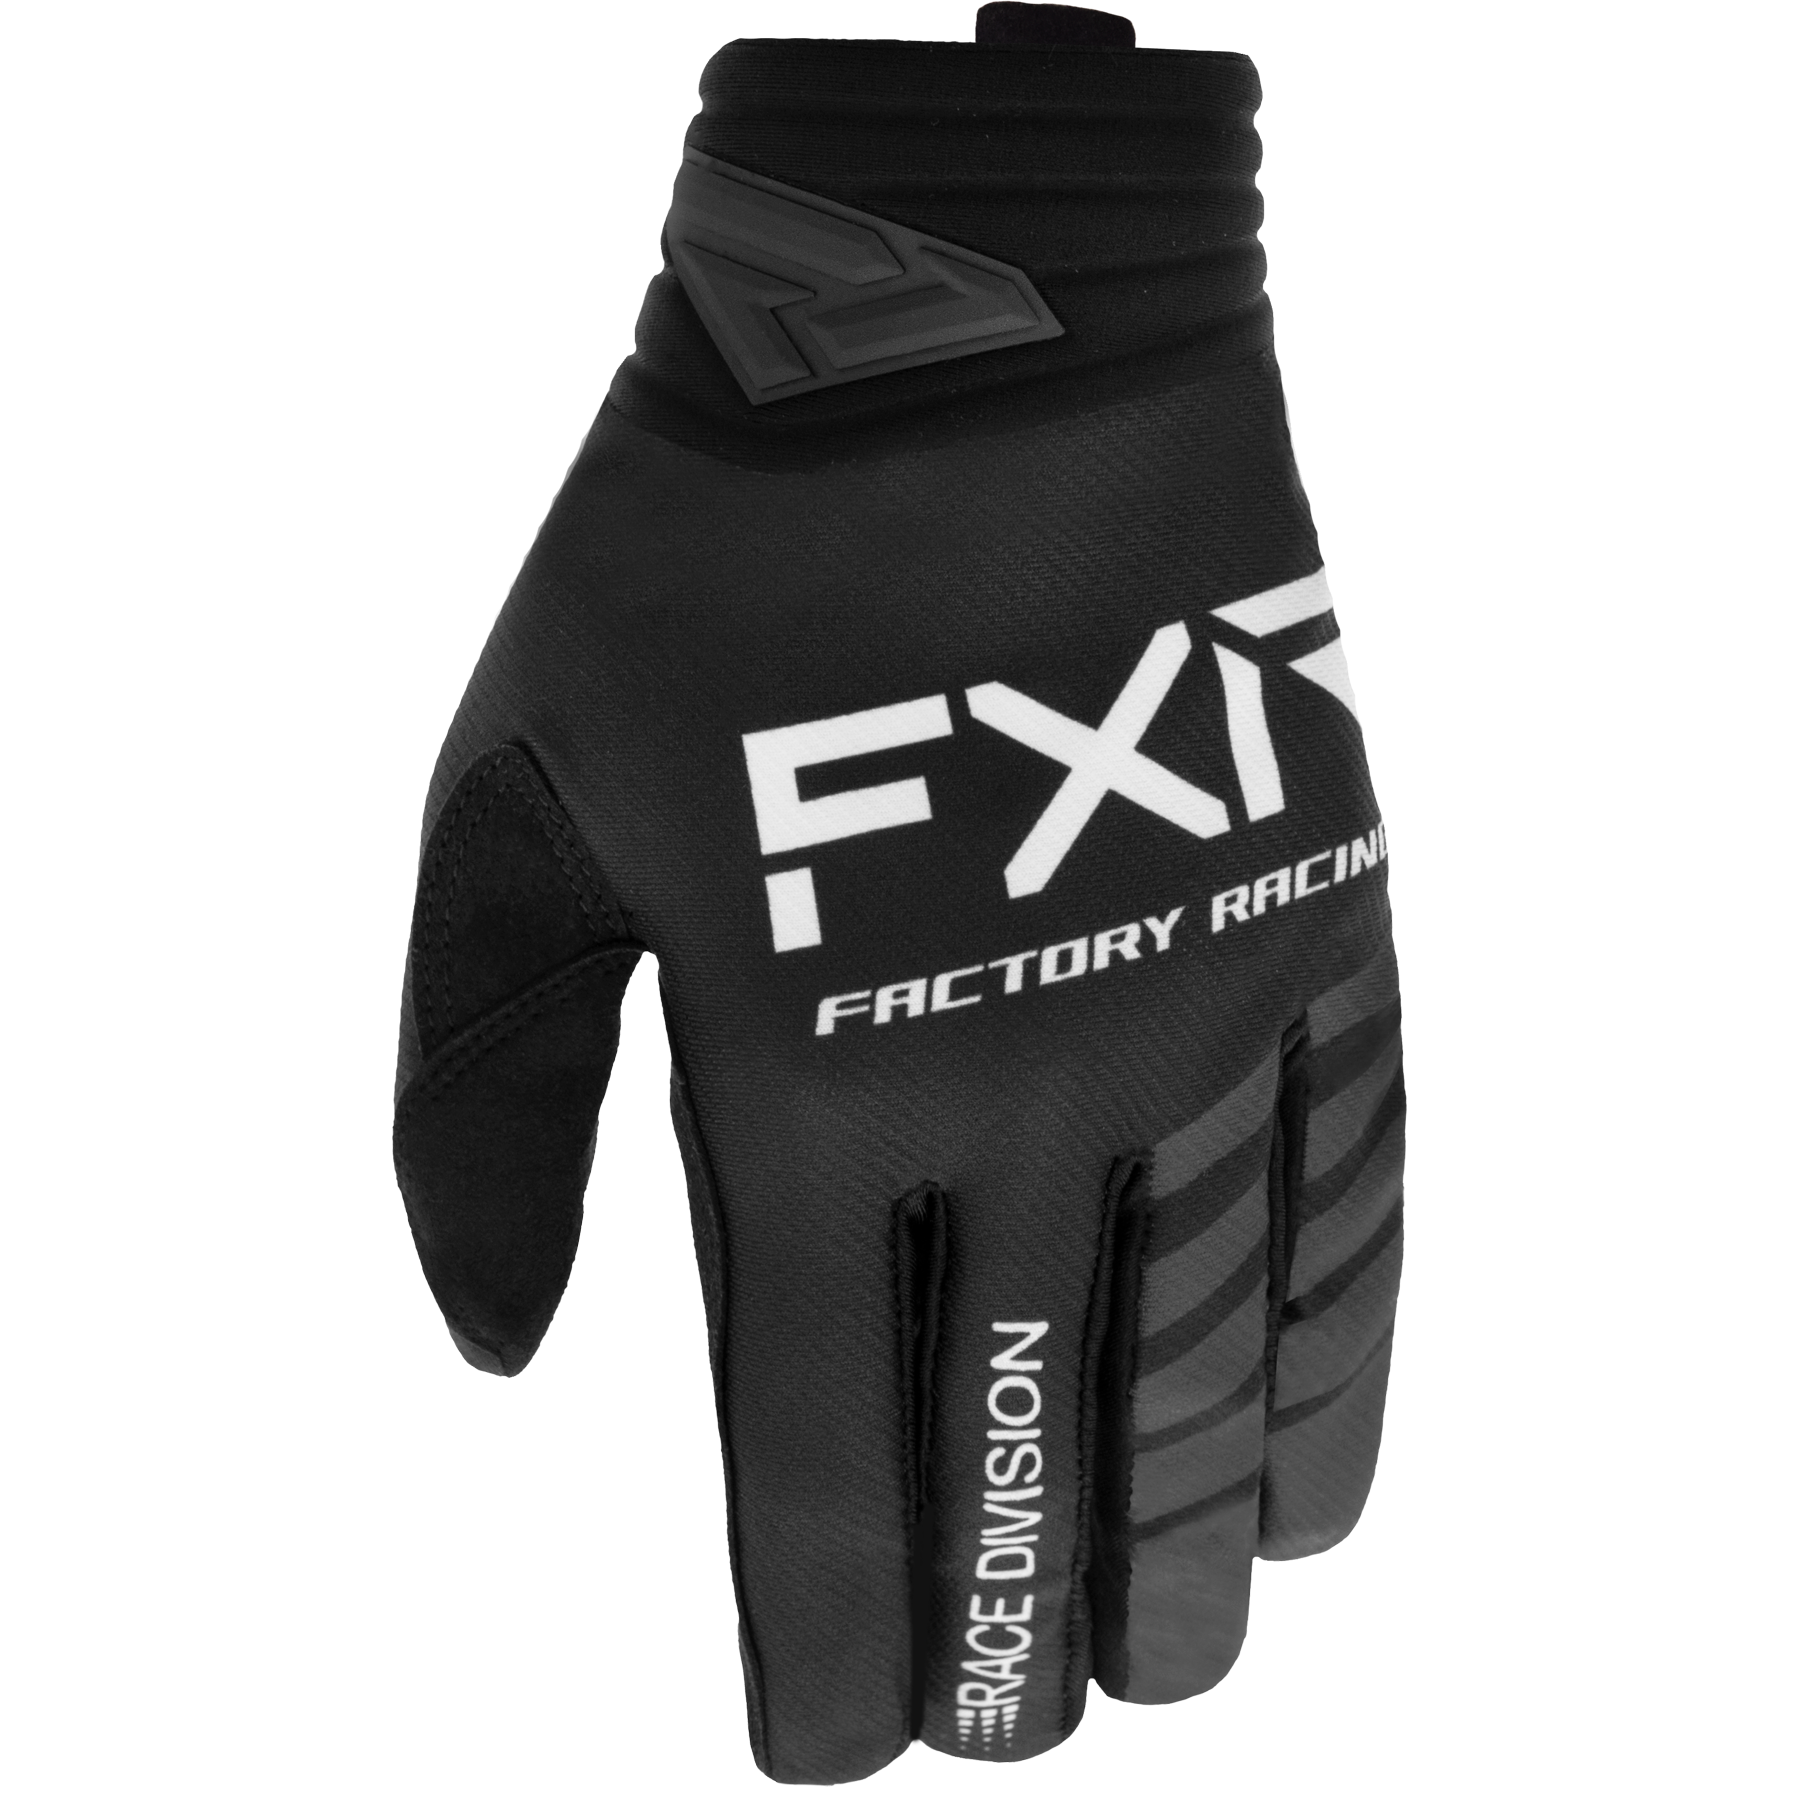 FXR Prime MX Glove Black/White